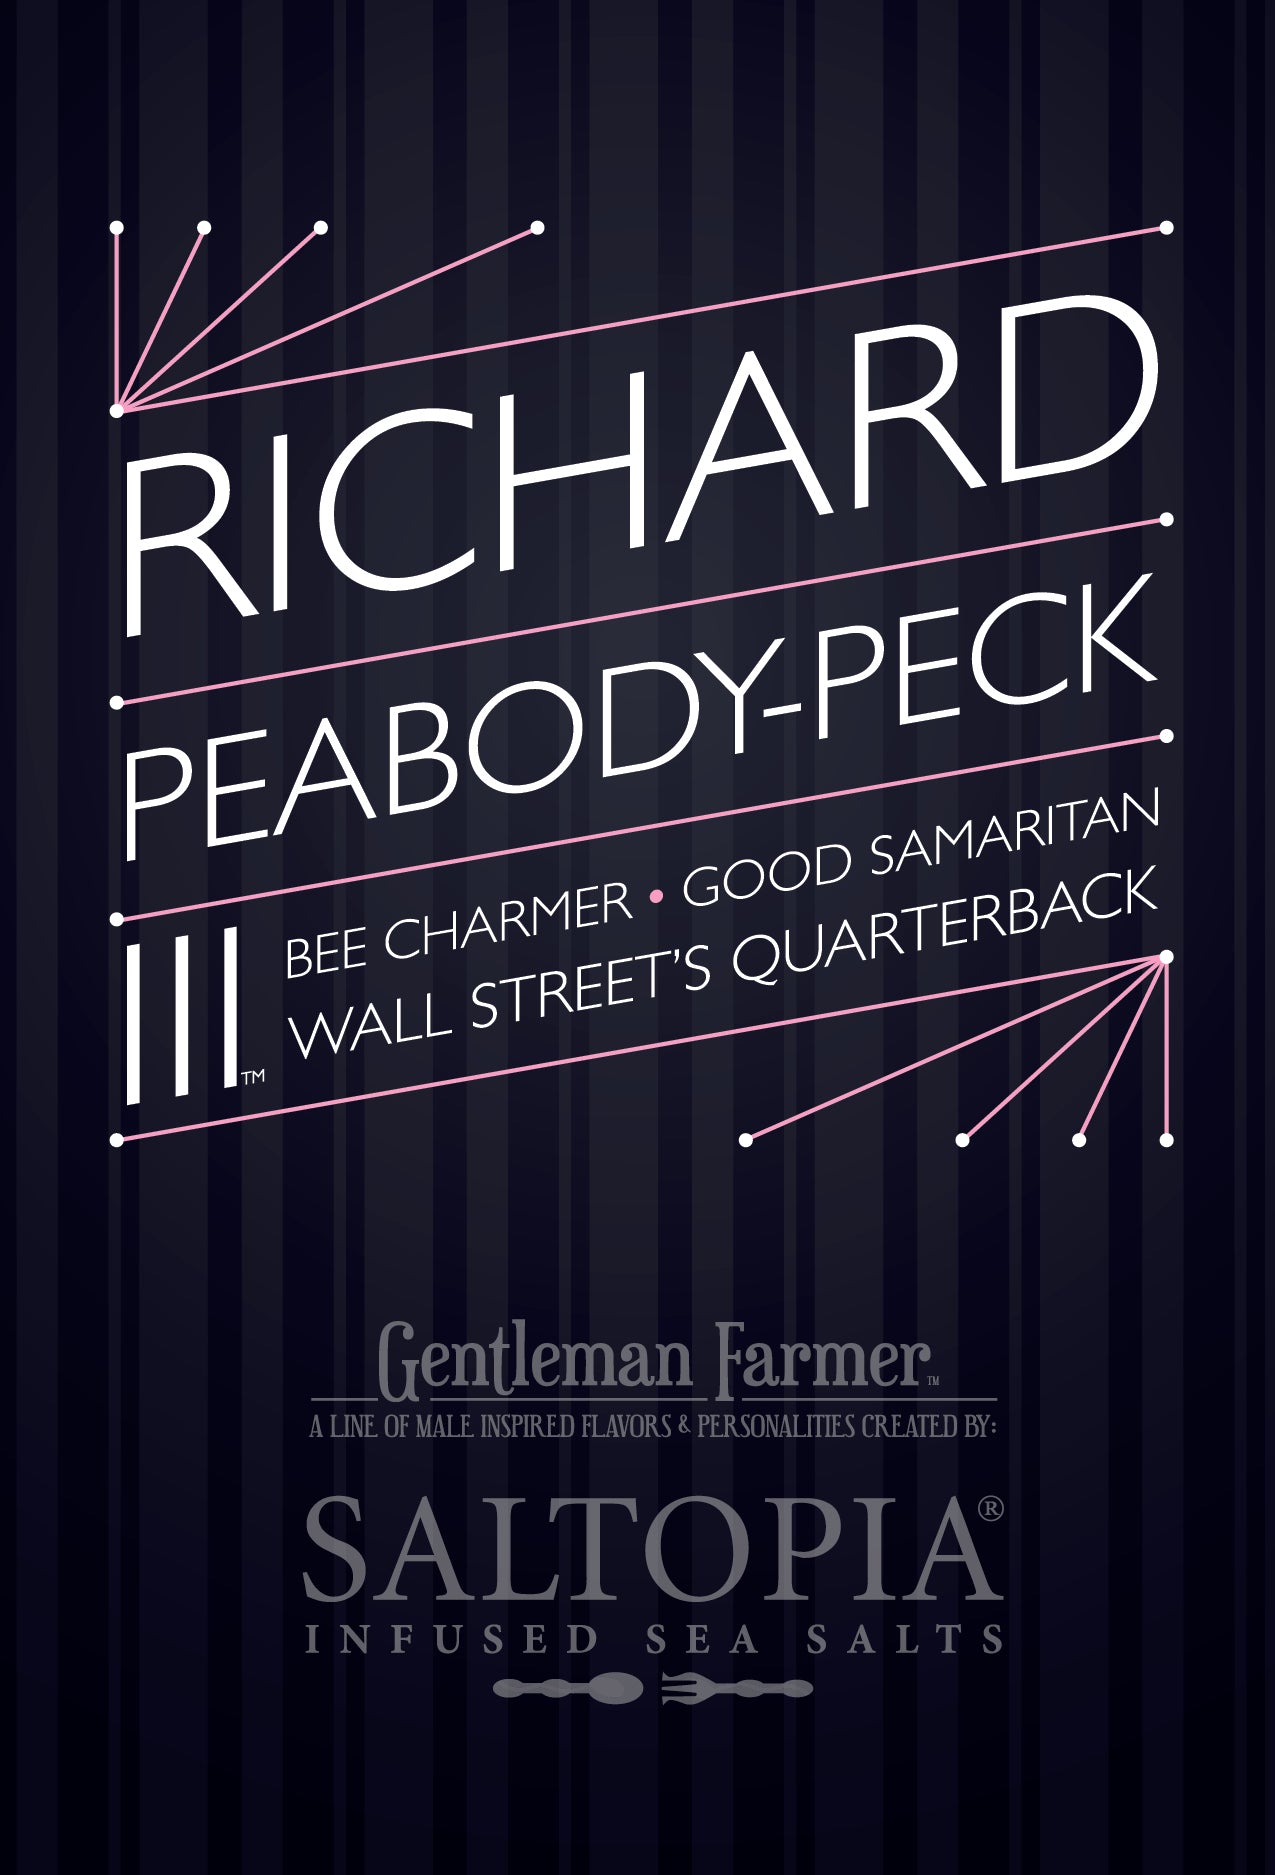 Richard Peabody-Peck III tm 16oz